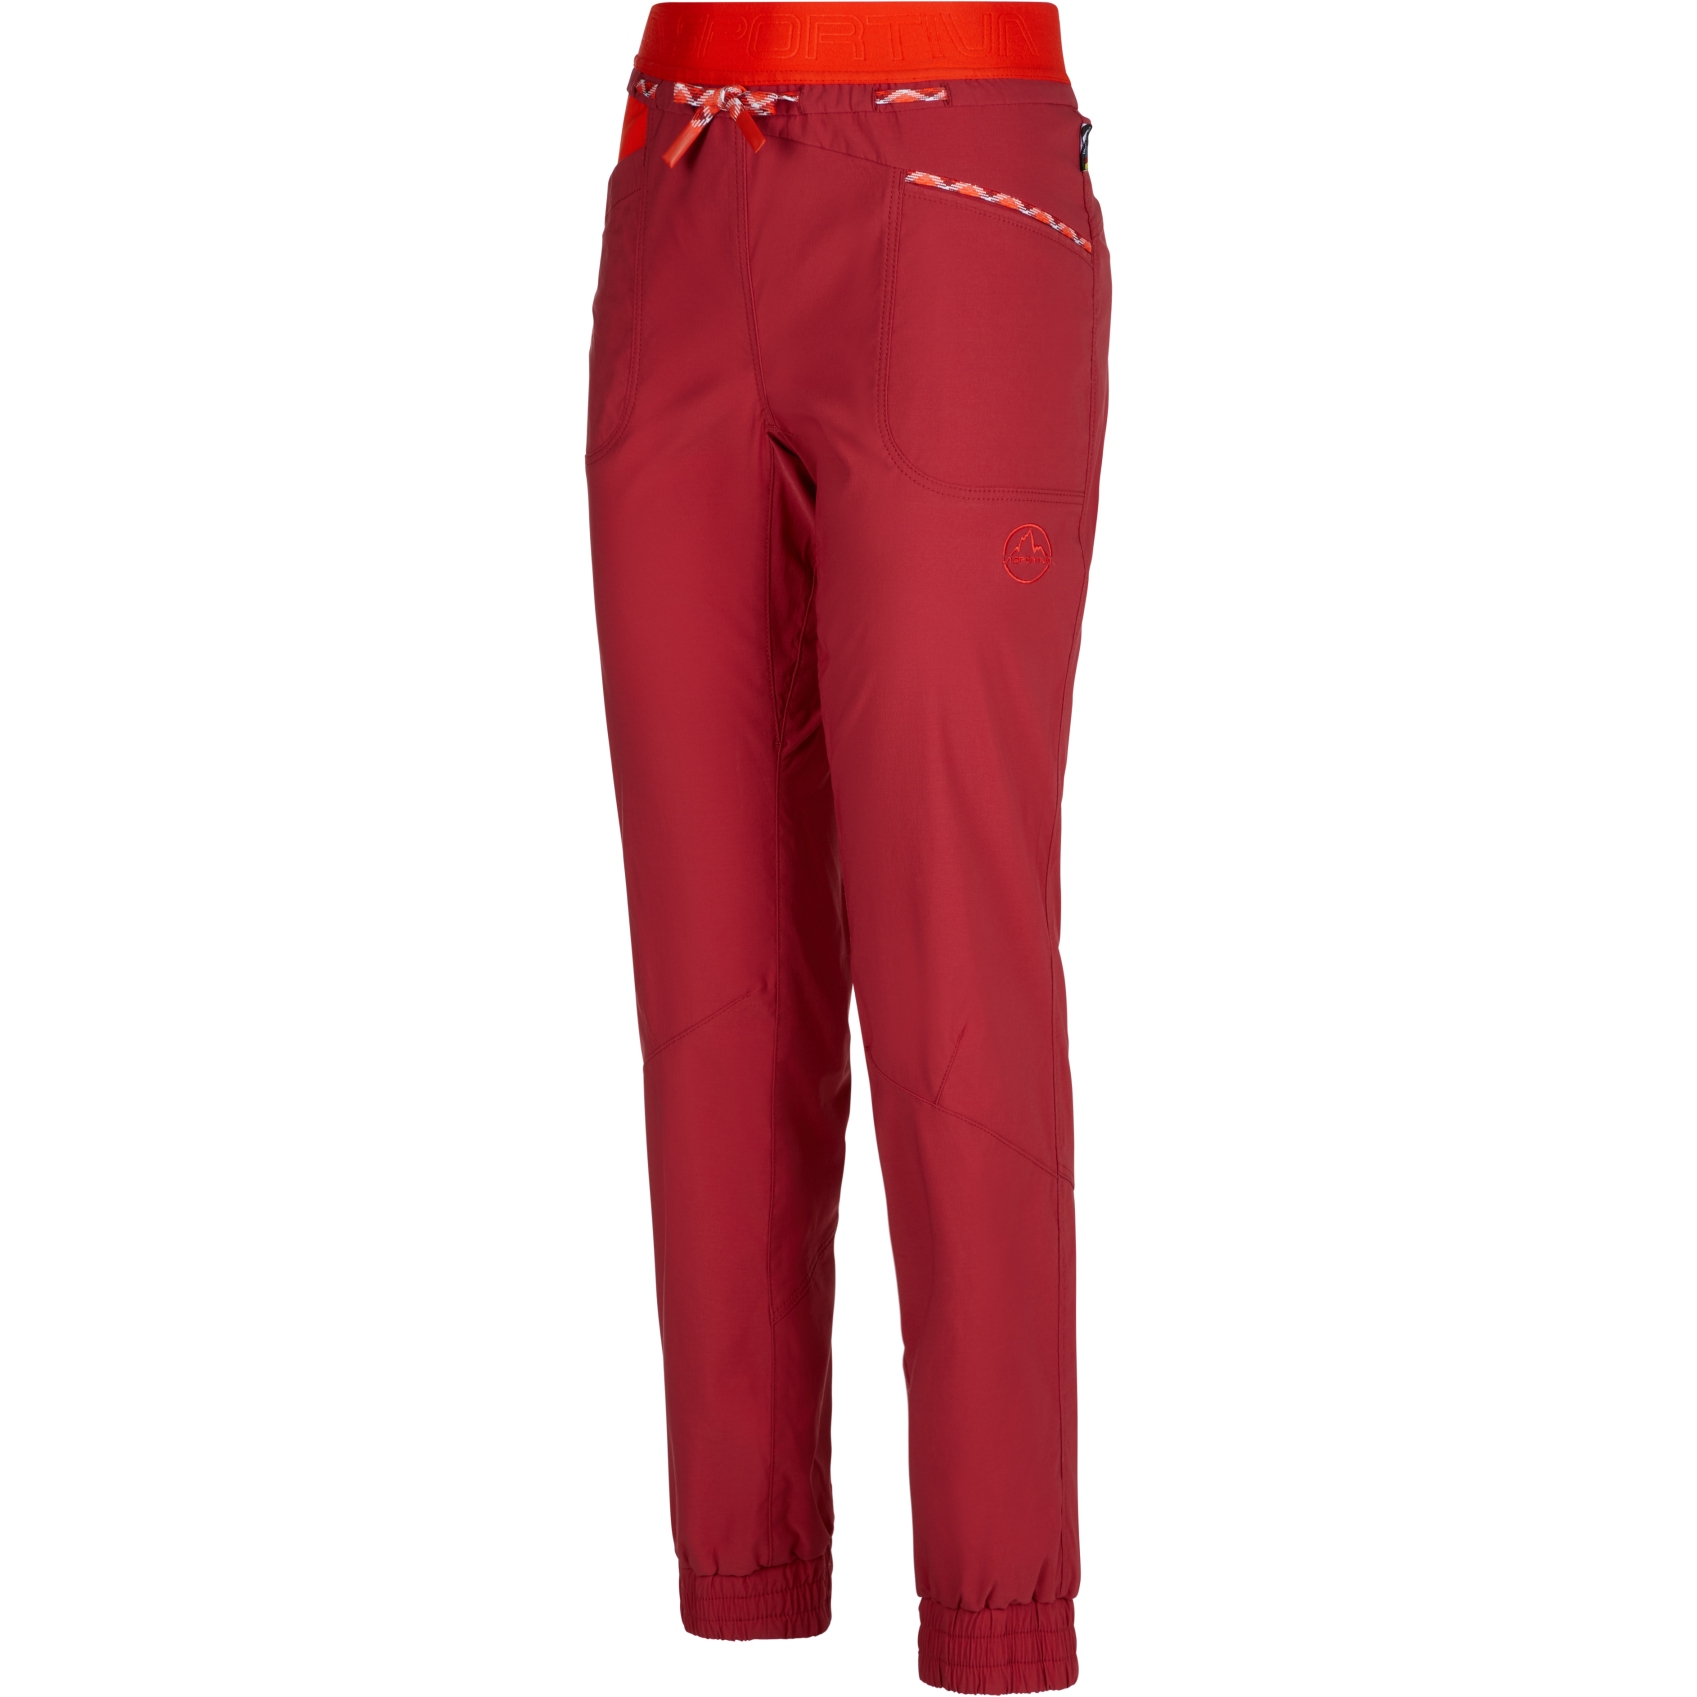 Picture of La Sportiva Mantra Pants Women - Velvet/Cherry Tomato